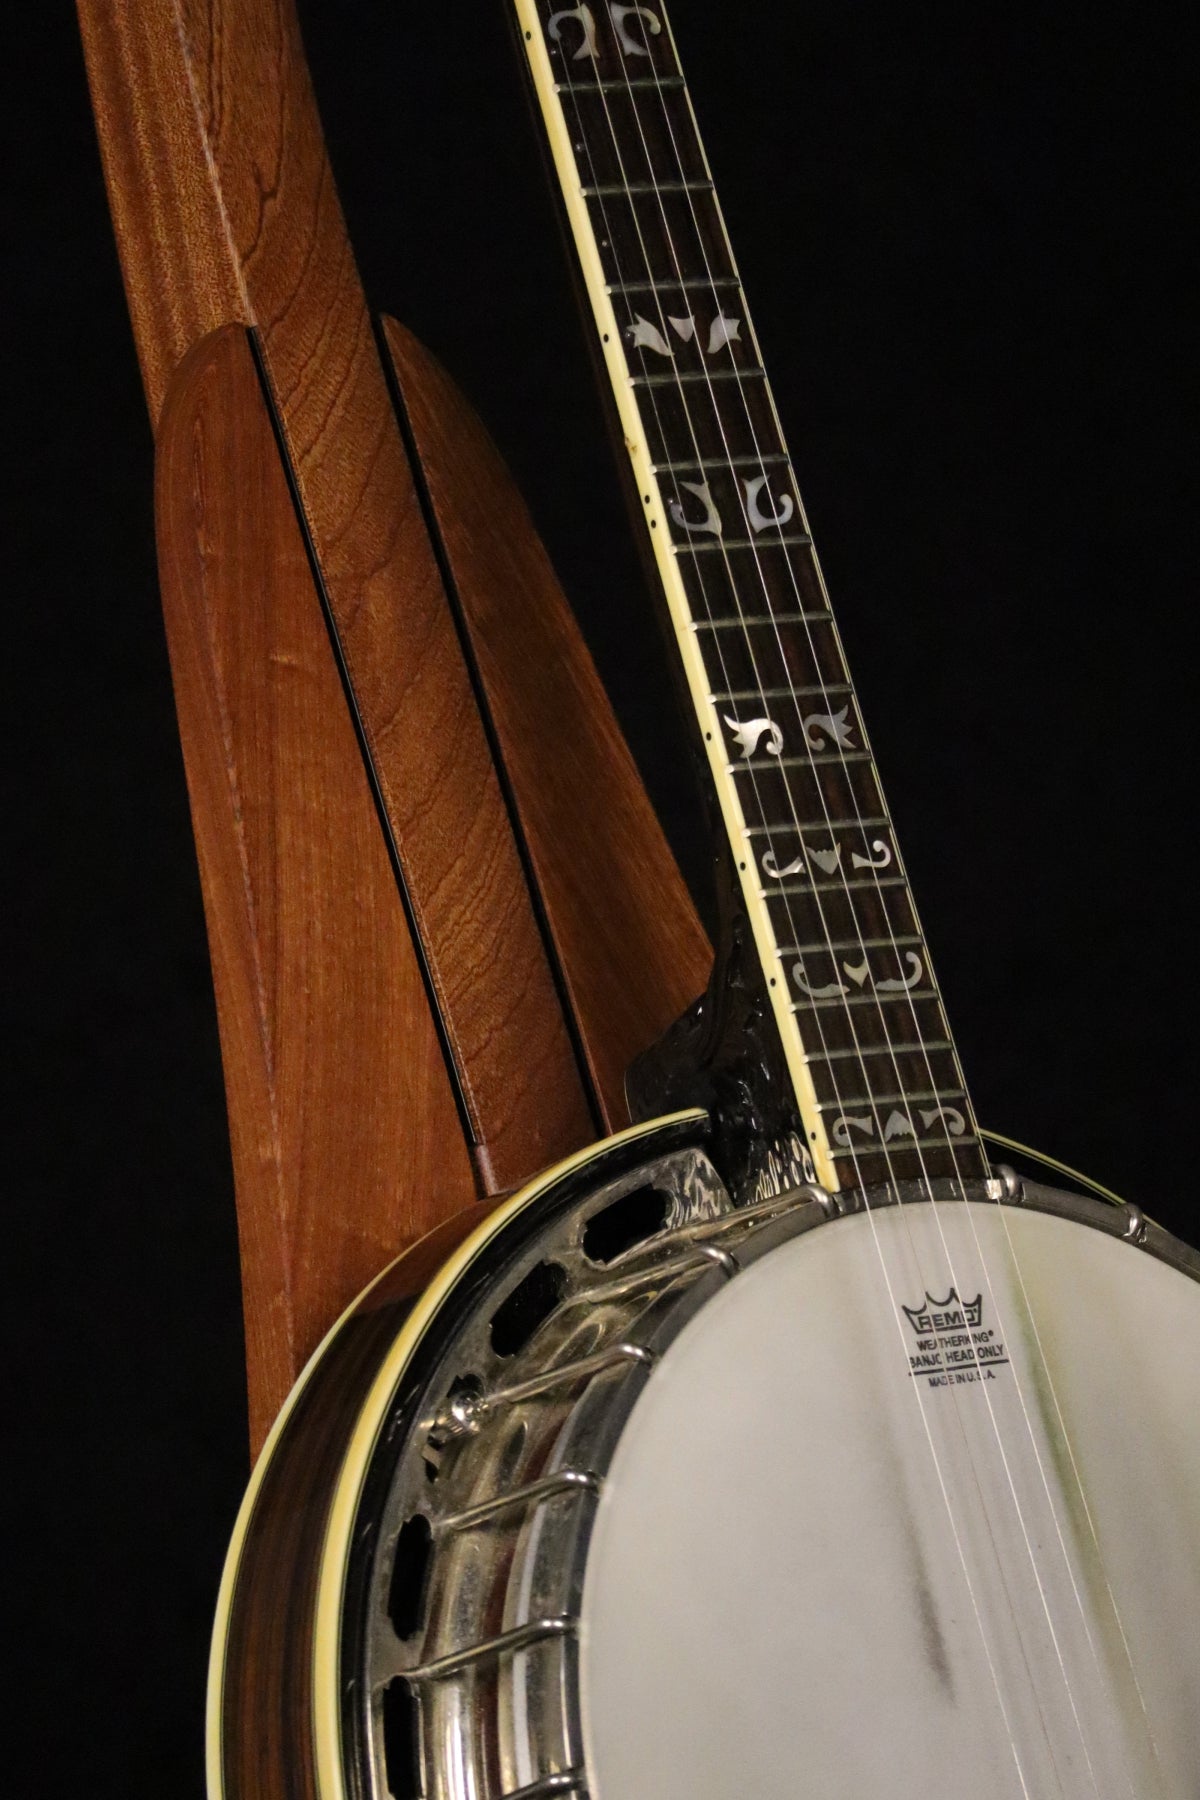 Folding sapele mahogany wood banjo floor stand closeup front image with Alvarez banjo